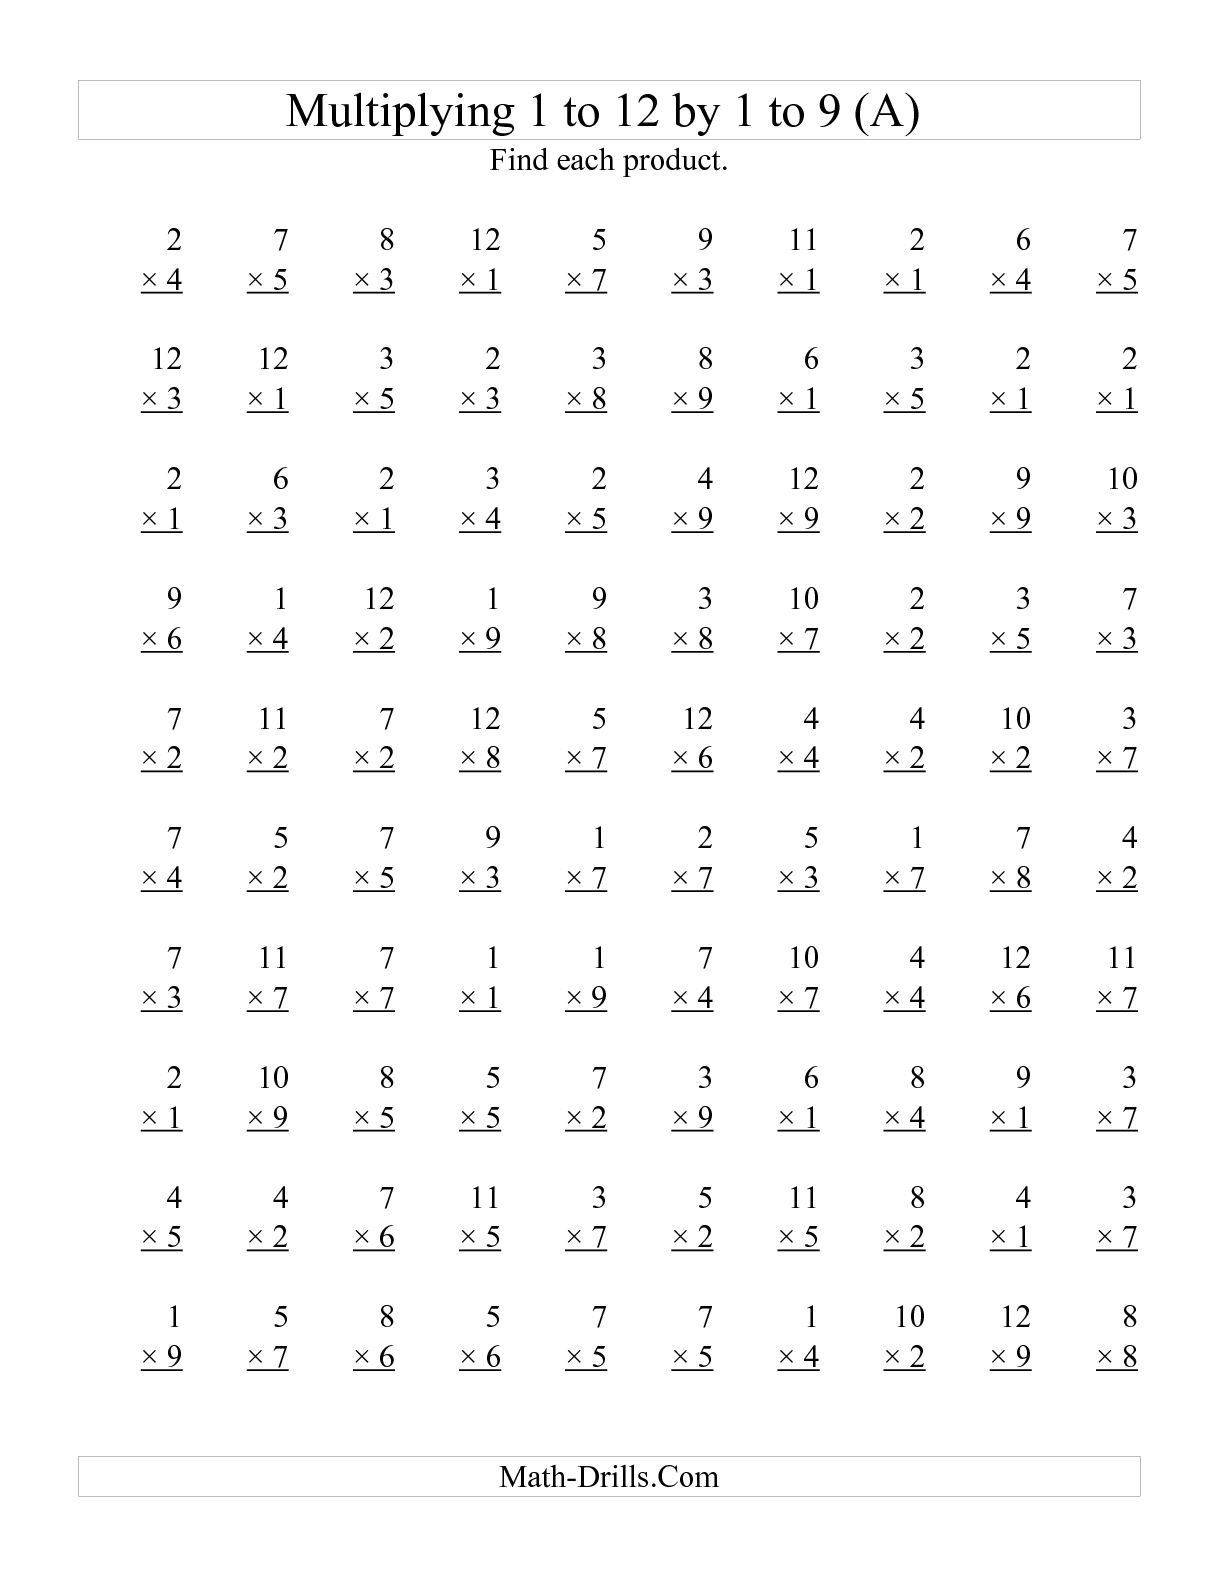 multiplication-worksheets-x6-printable-multiplication-flash-cards